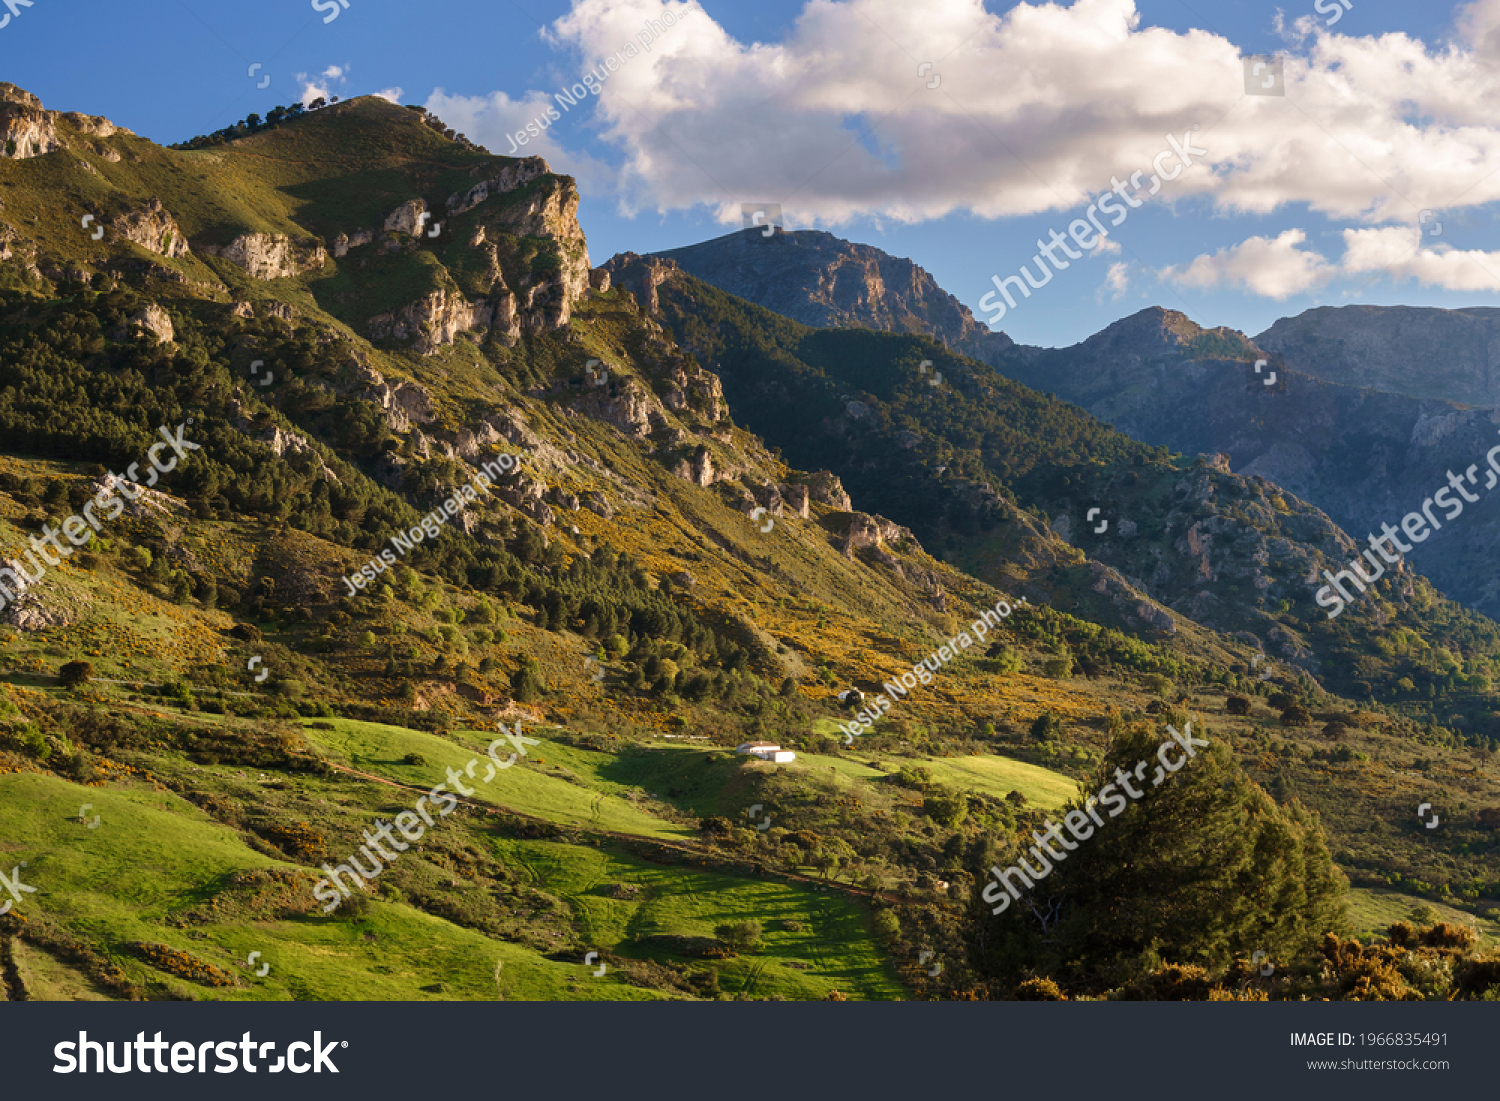 North face of the Sierra Prieta mountains, near the Sierra de las Nieves national park in Malaga. Andalusia, Spain #1966835491